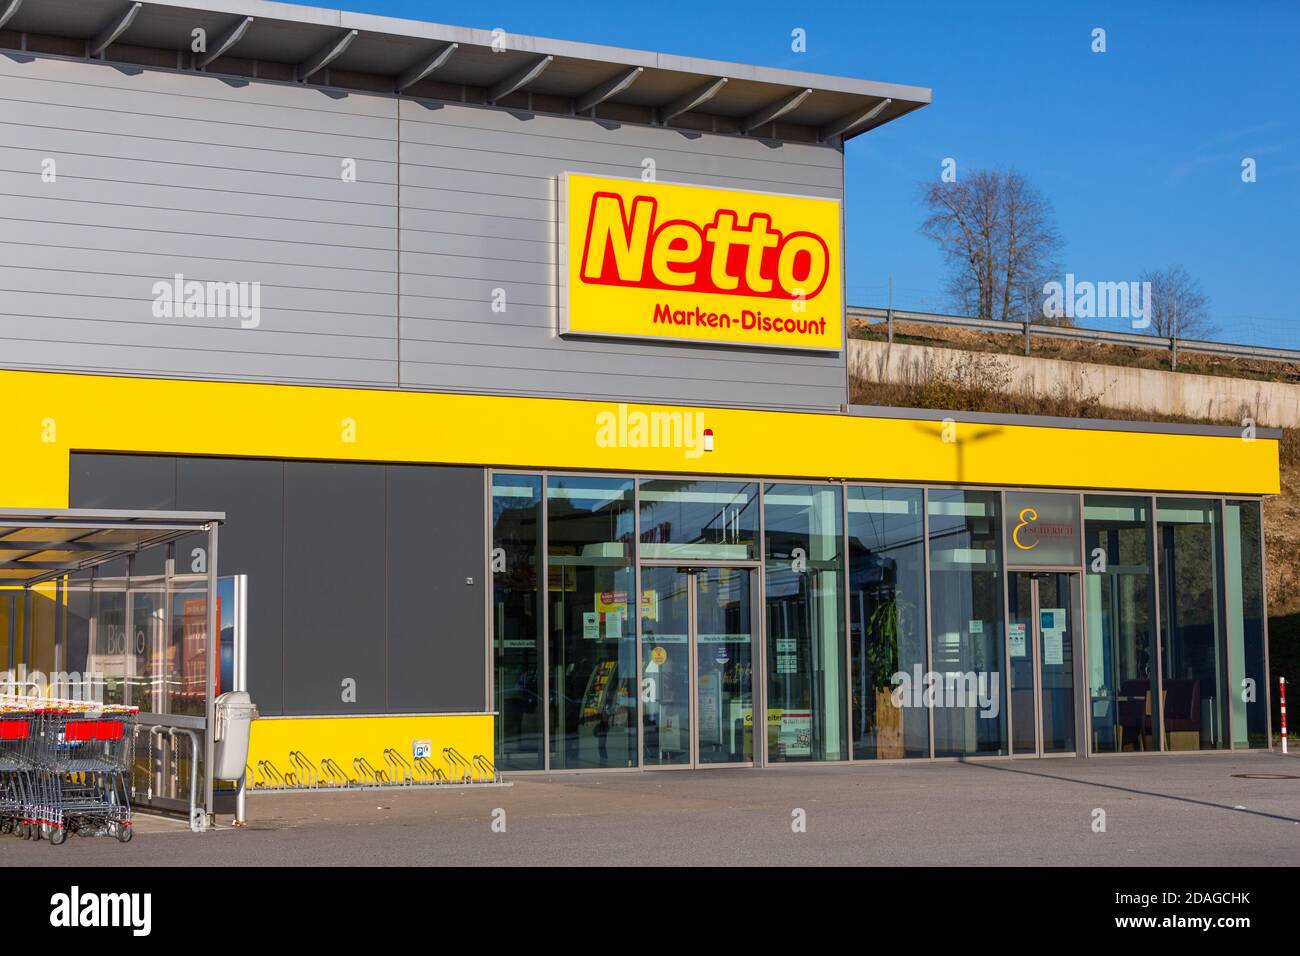 PASSAU / GERMANY - NOVEMBER 8, 2020: Branch logo of Netto. Netto Marken-Discount is a German discount supermarket chain. Stock Photo